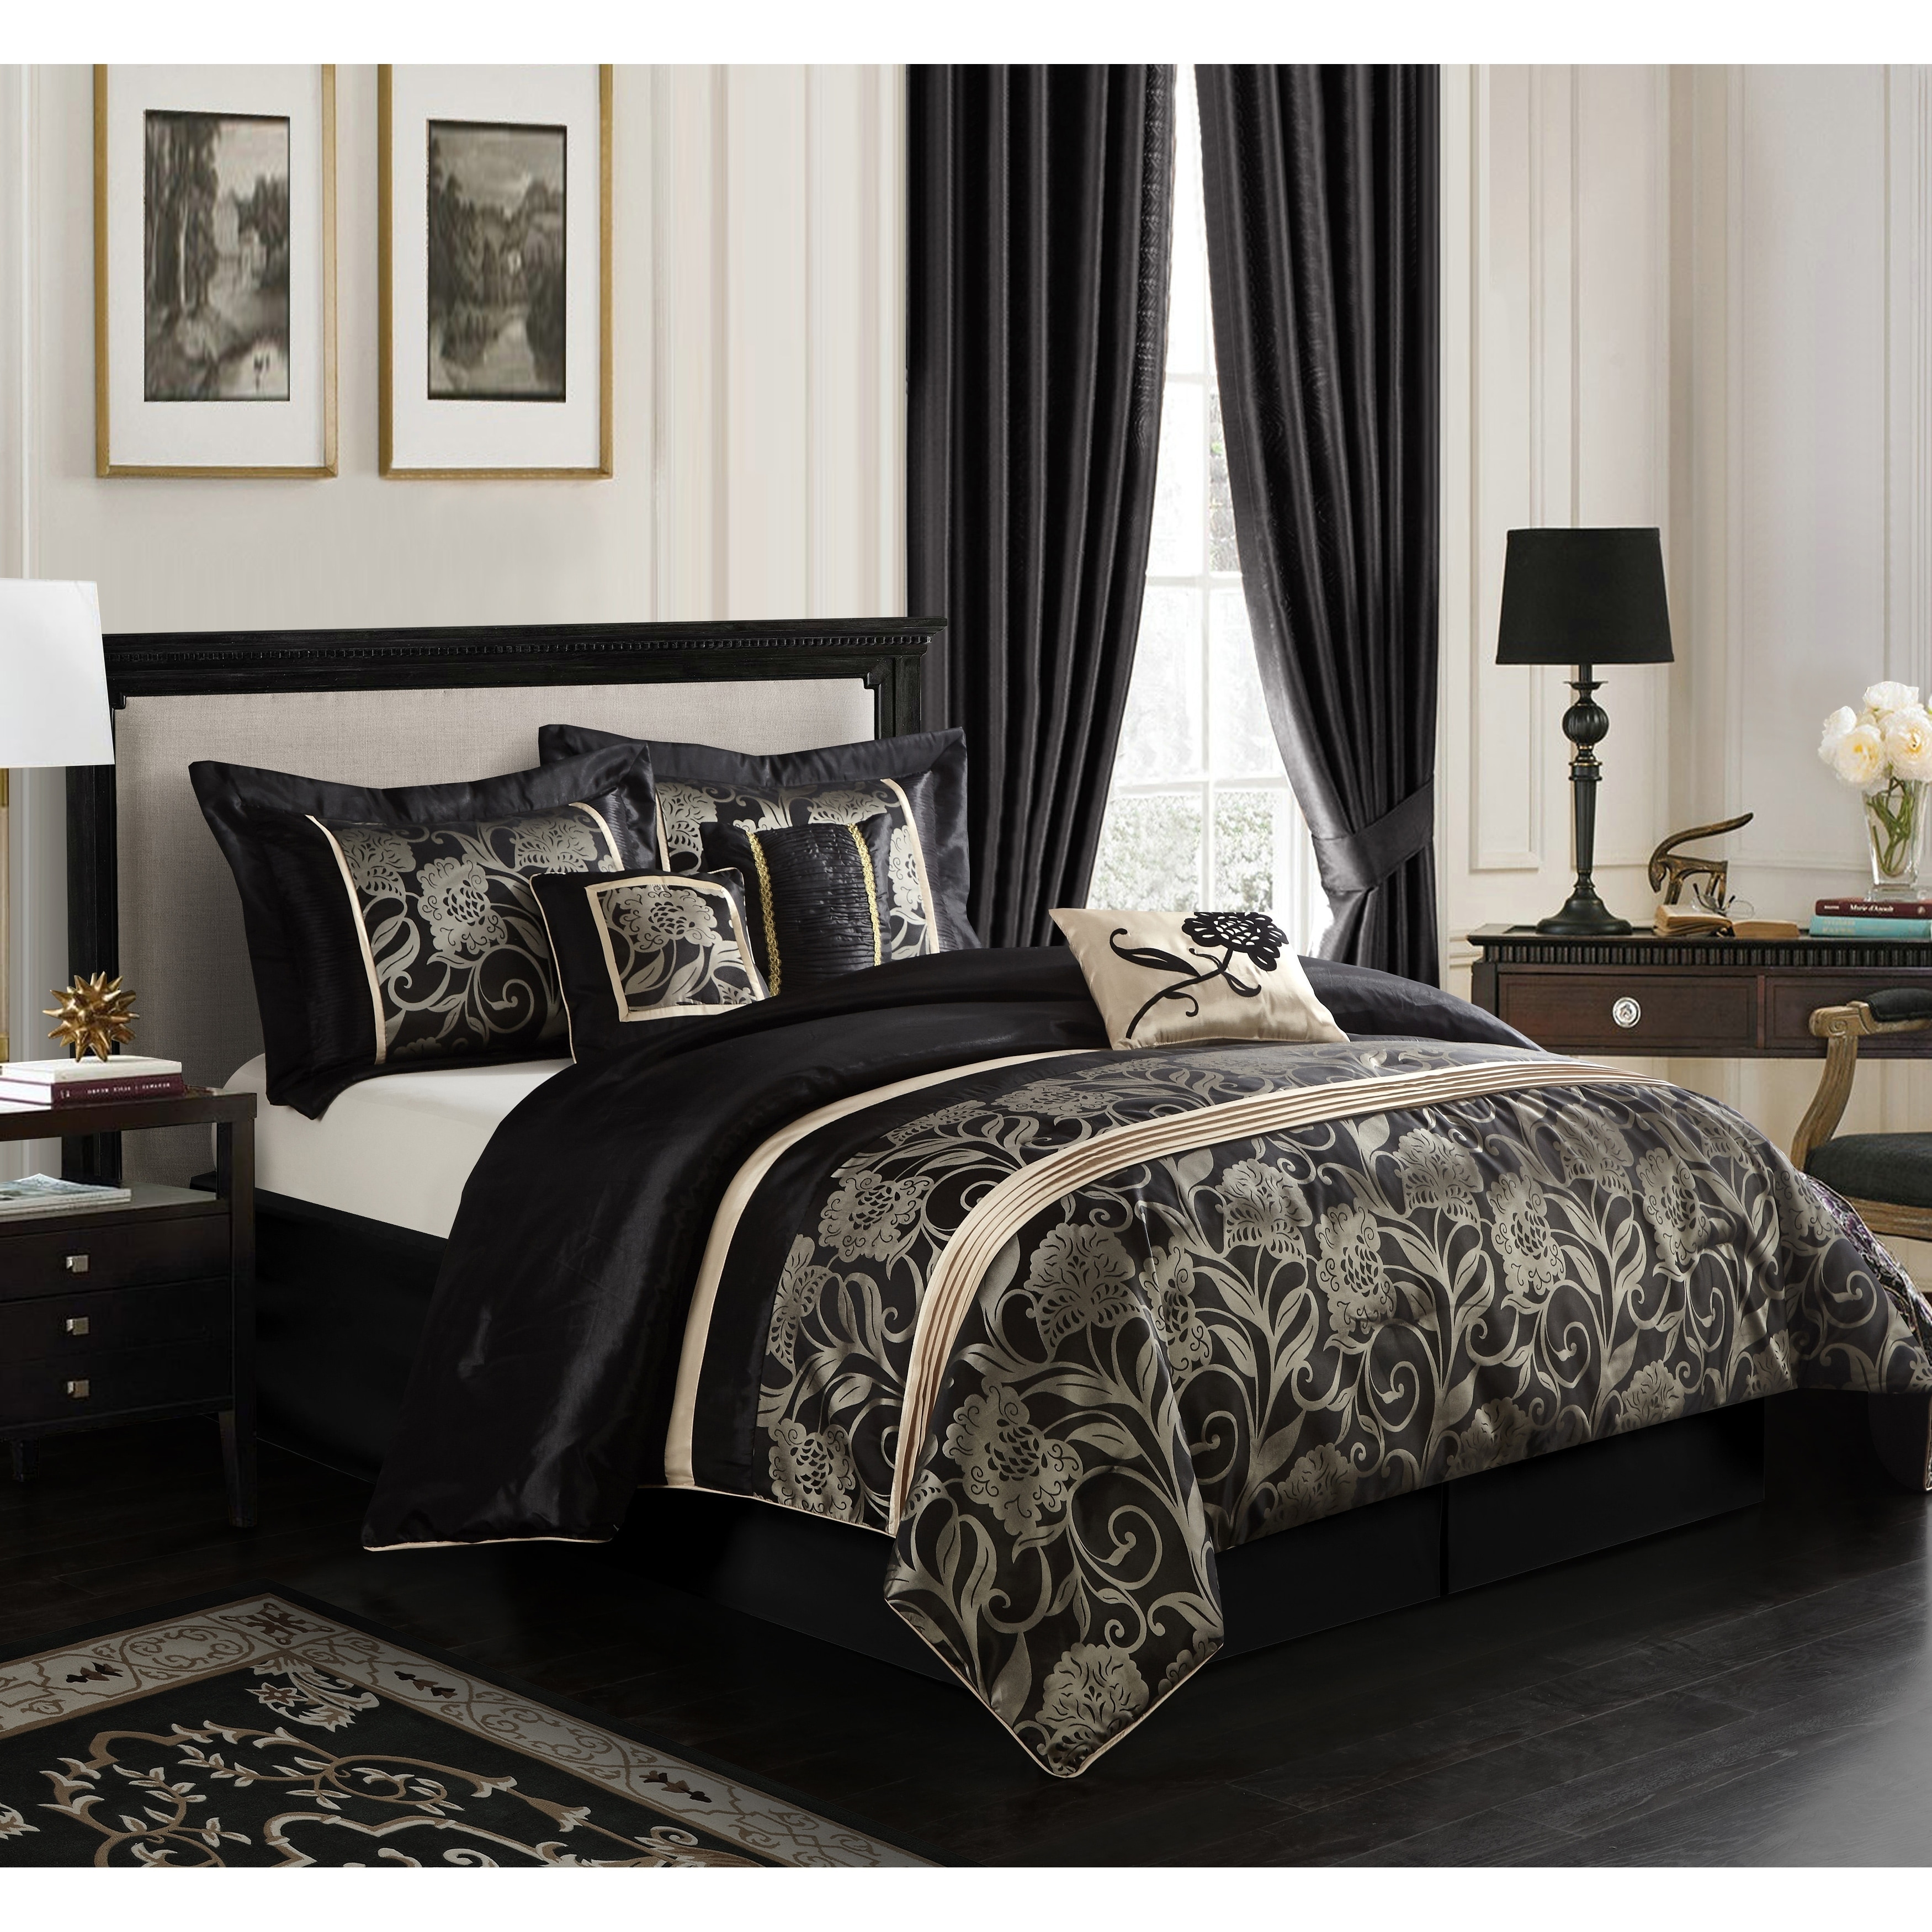  Basic Beyond Queen Comforter Set - Black Comforter Set Queen, Reversible  Bed Comforter Queen Set for All Seasons, Black/Grey, 1 Comforter (88x92)  and 2 Pillow Shams (20x26+2) : Home & Kitchen